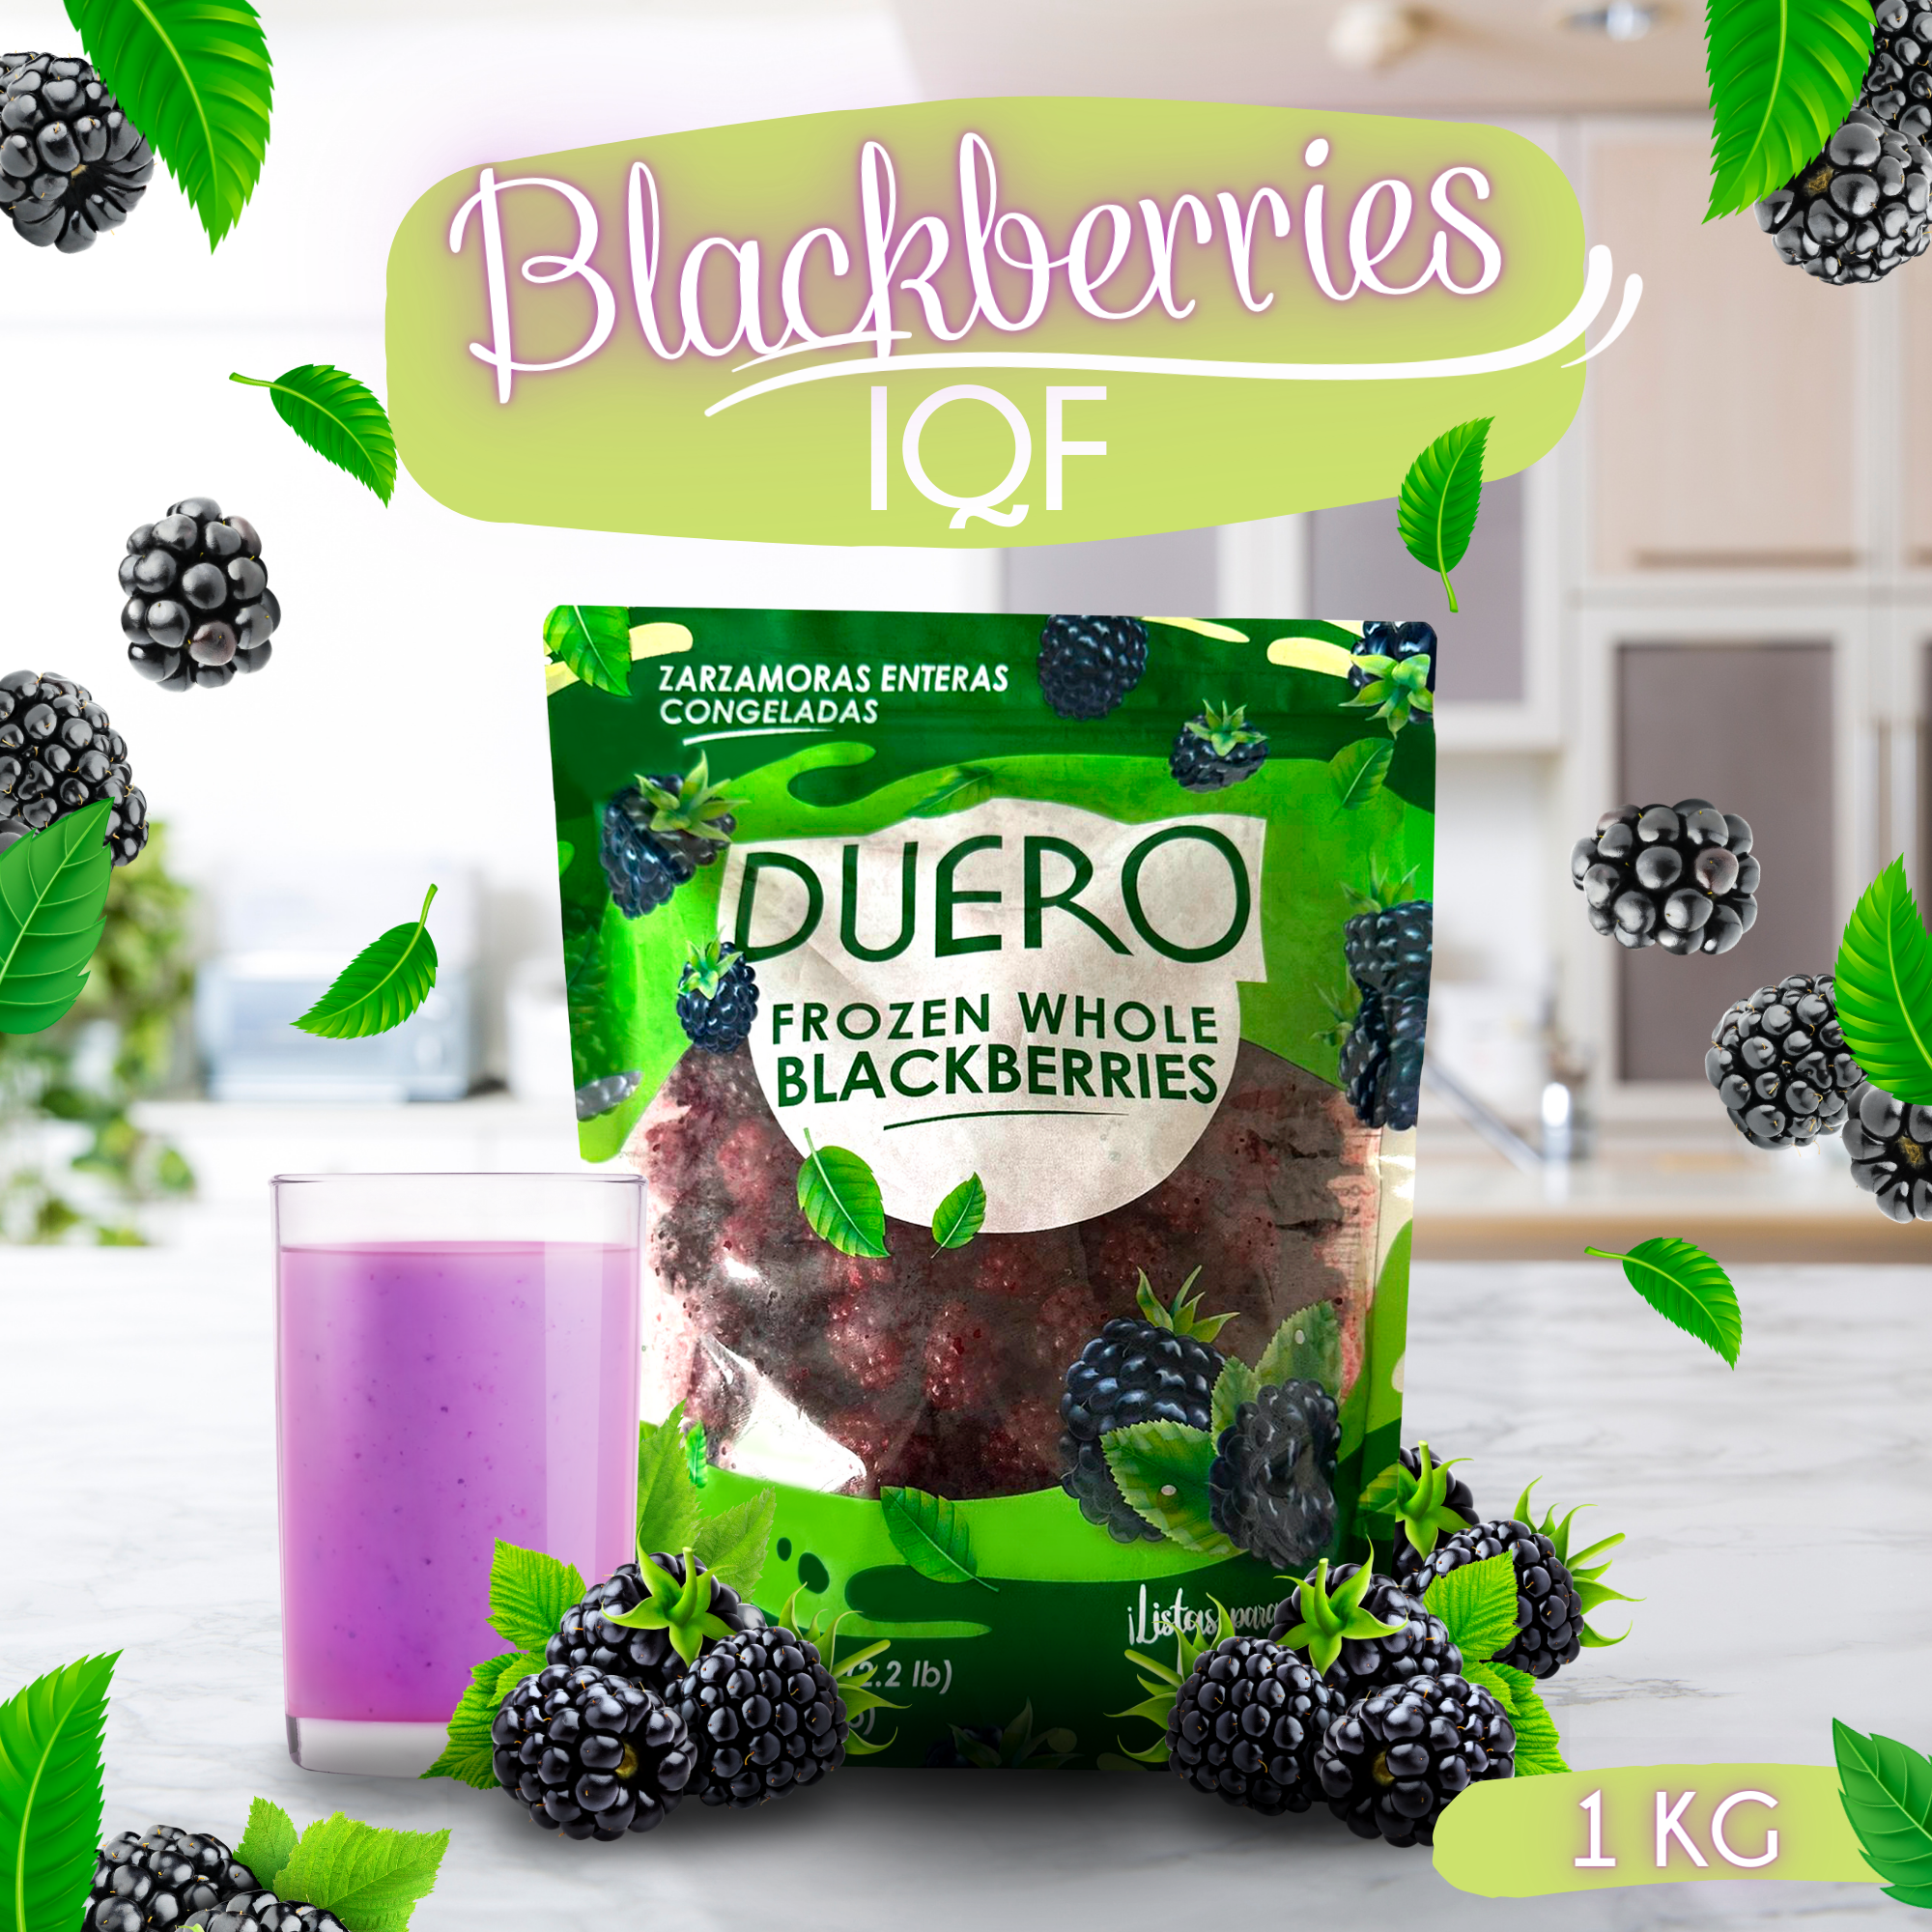 Productos inicio - blueberries IQF inglés (2)